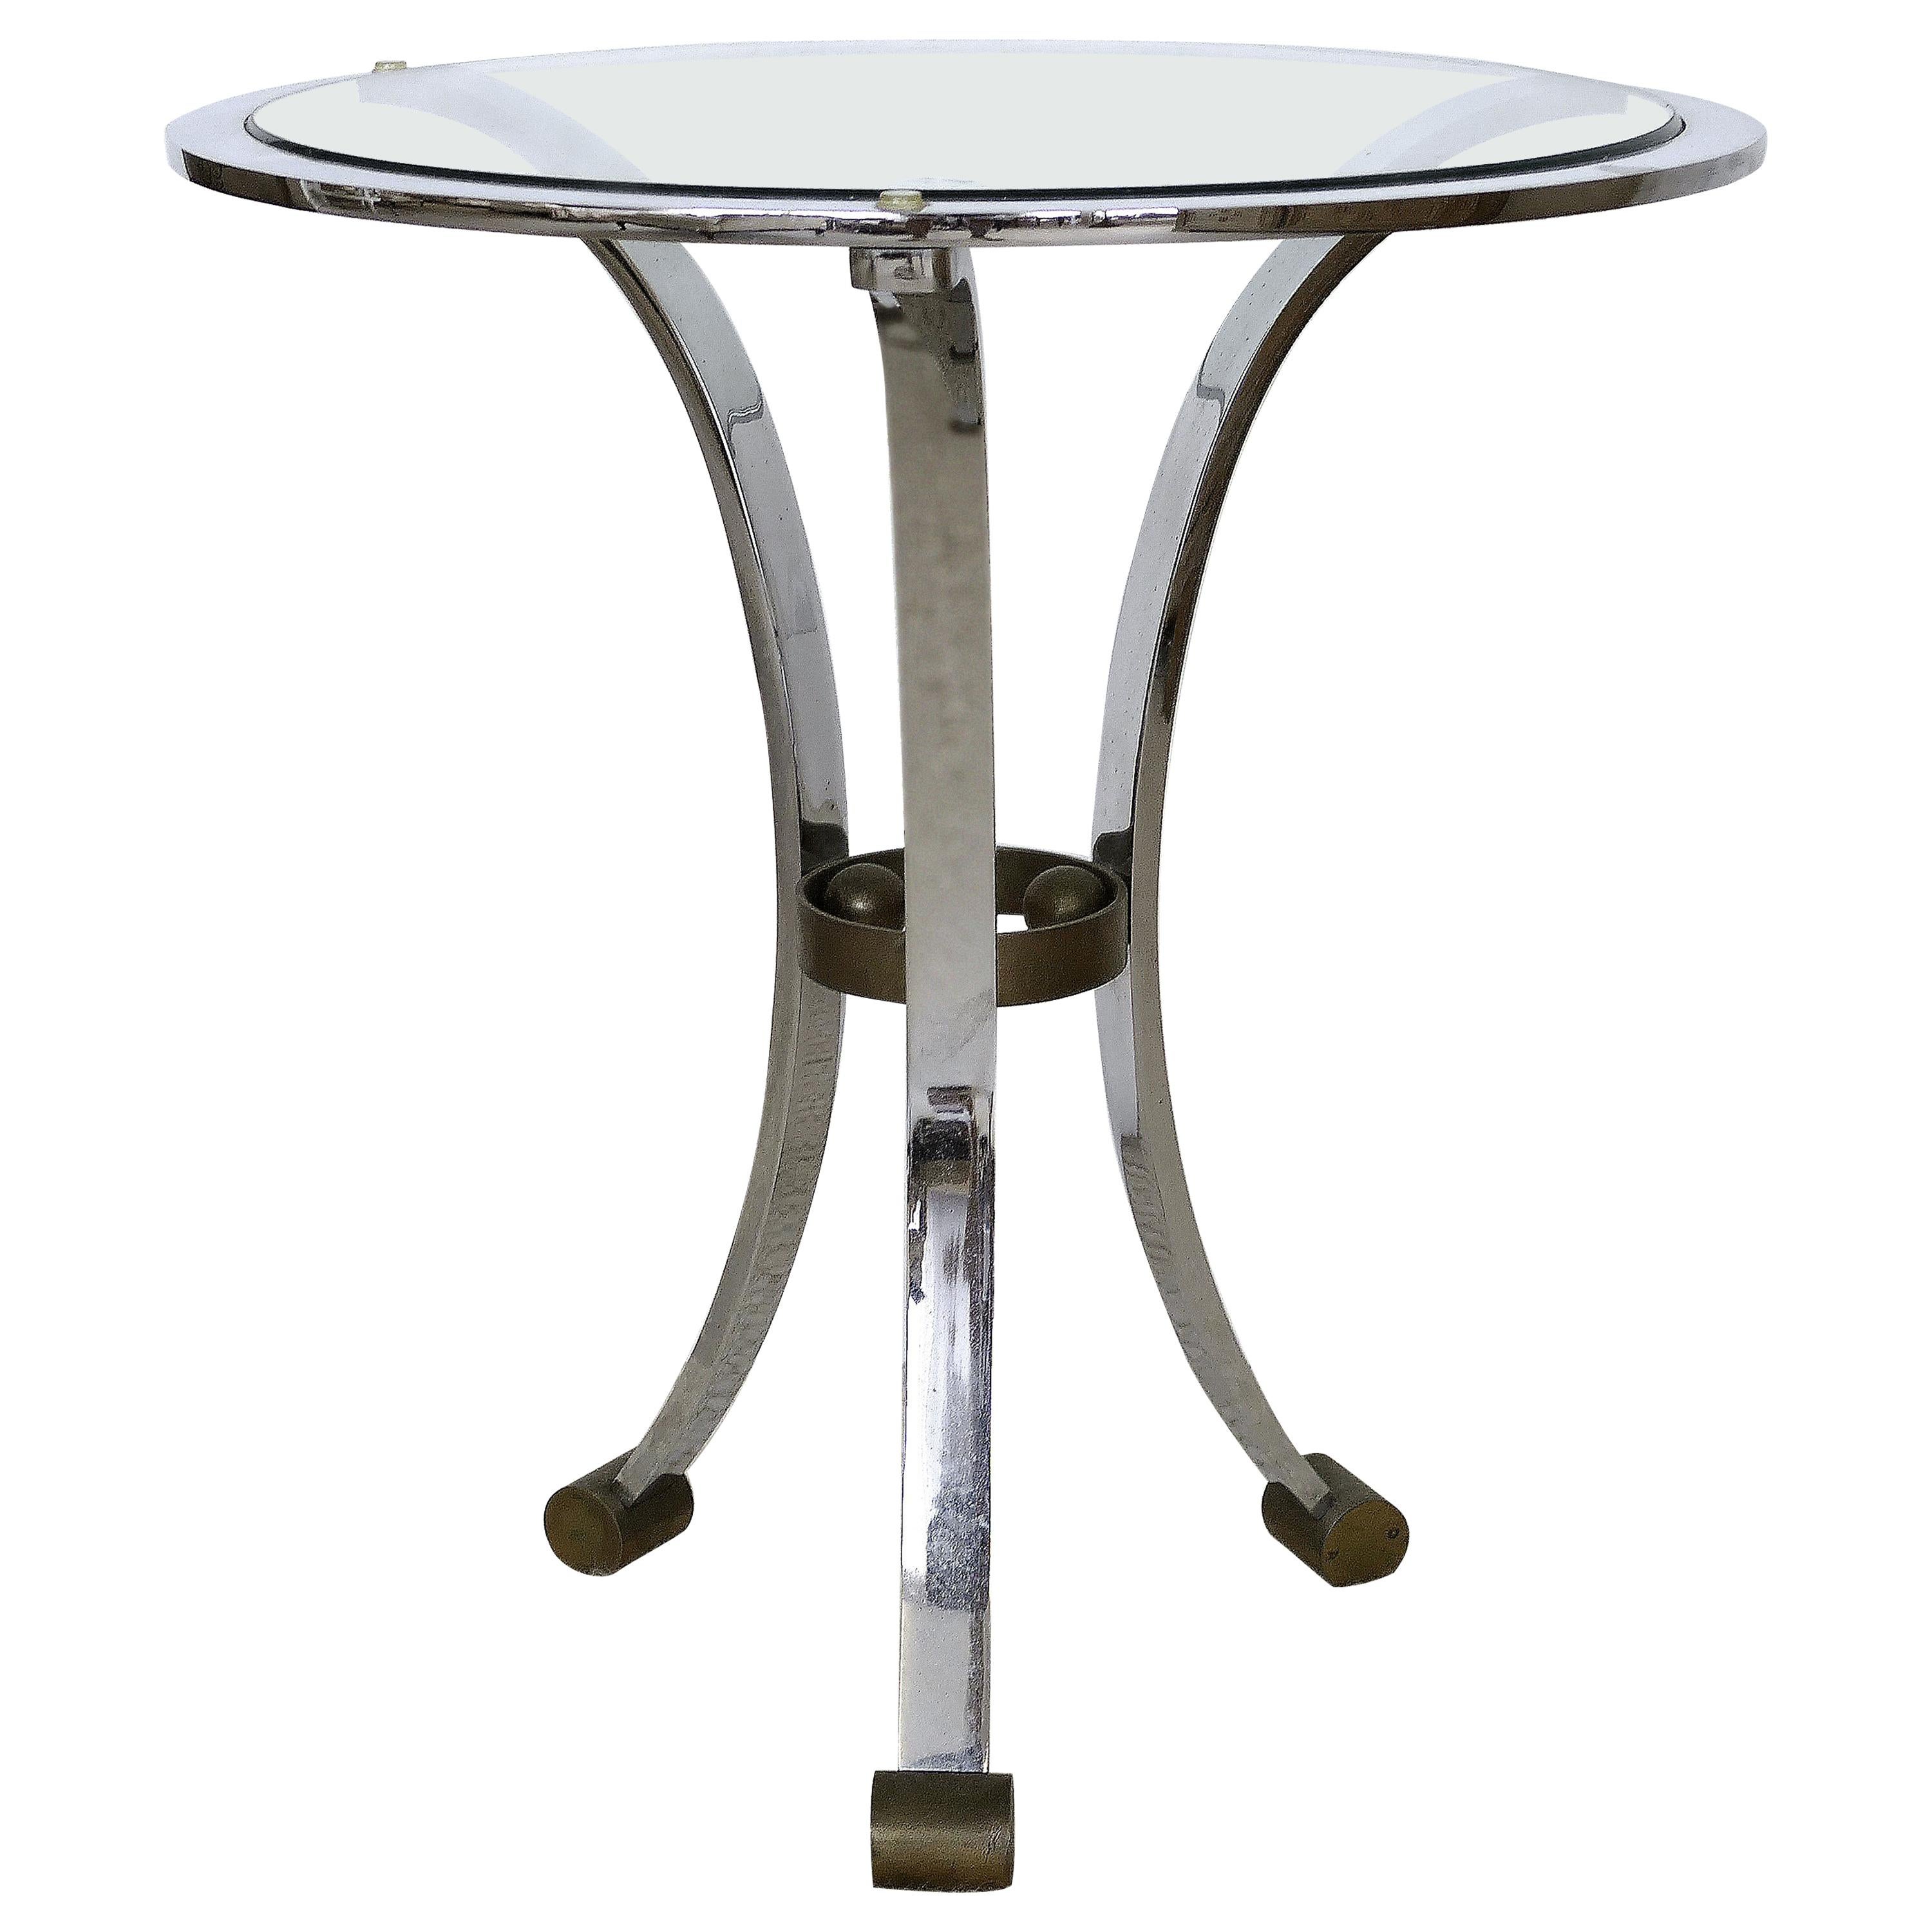 Maison Jansen Attributed Gueridon Table in Stainless Steel & Bronze